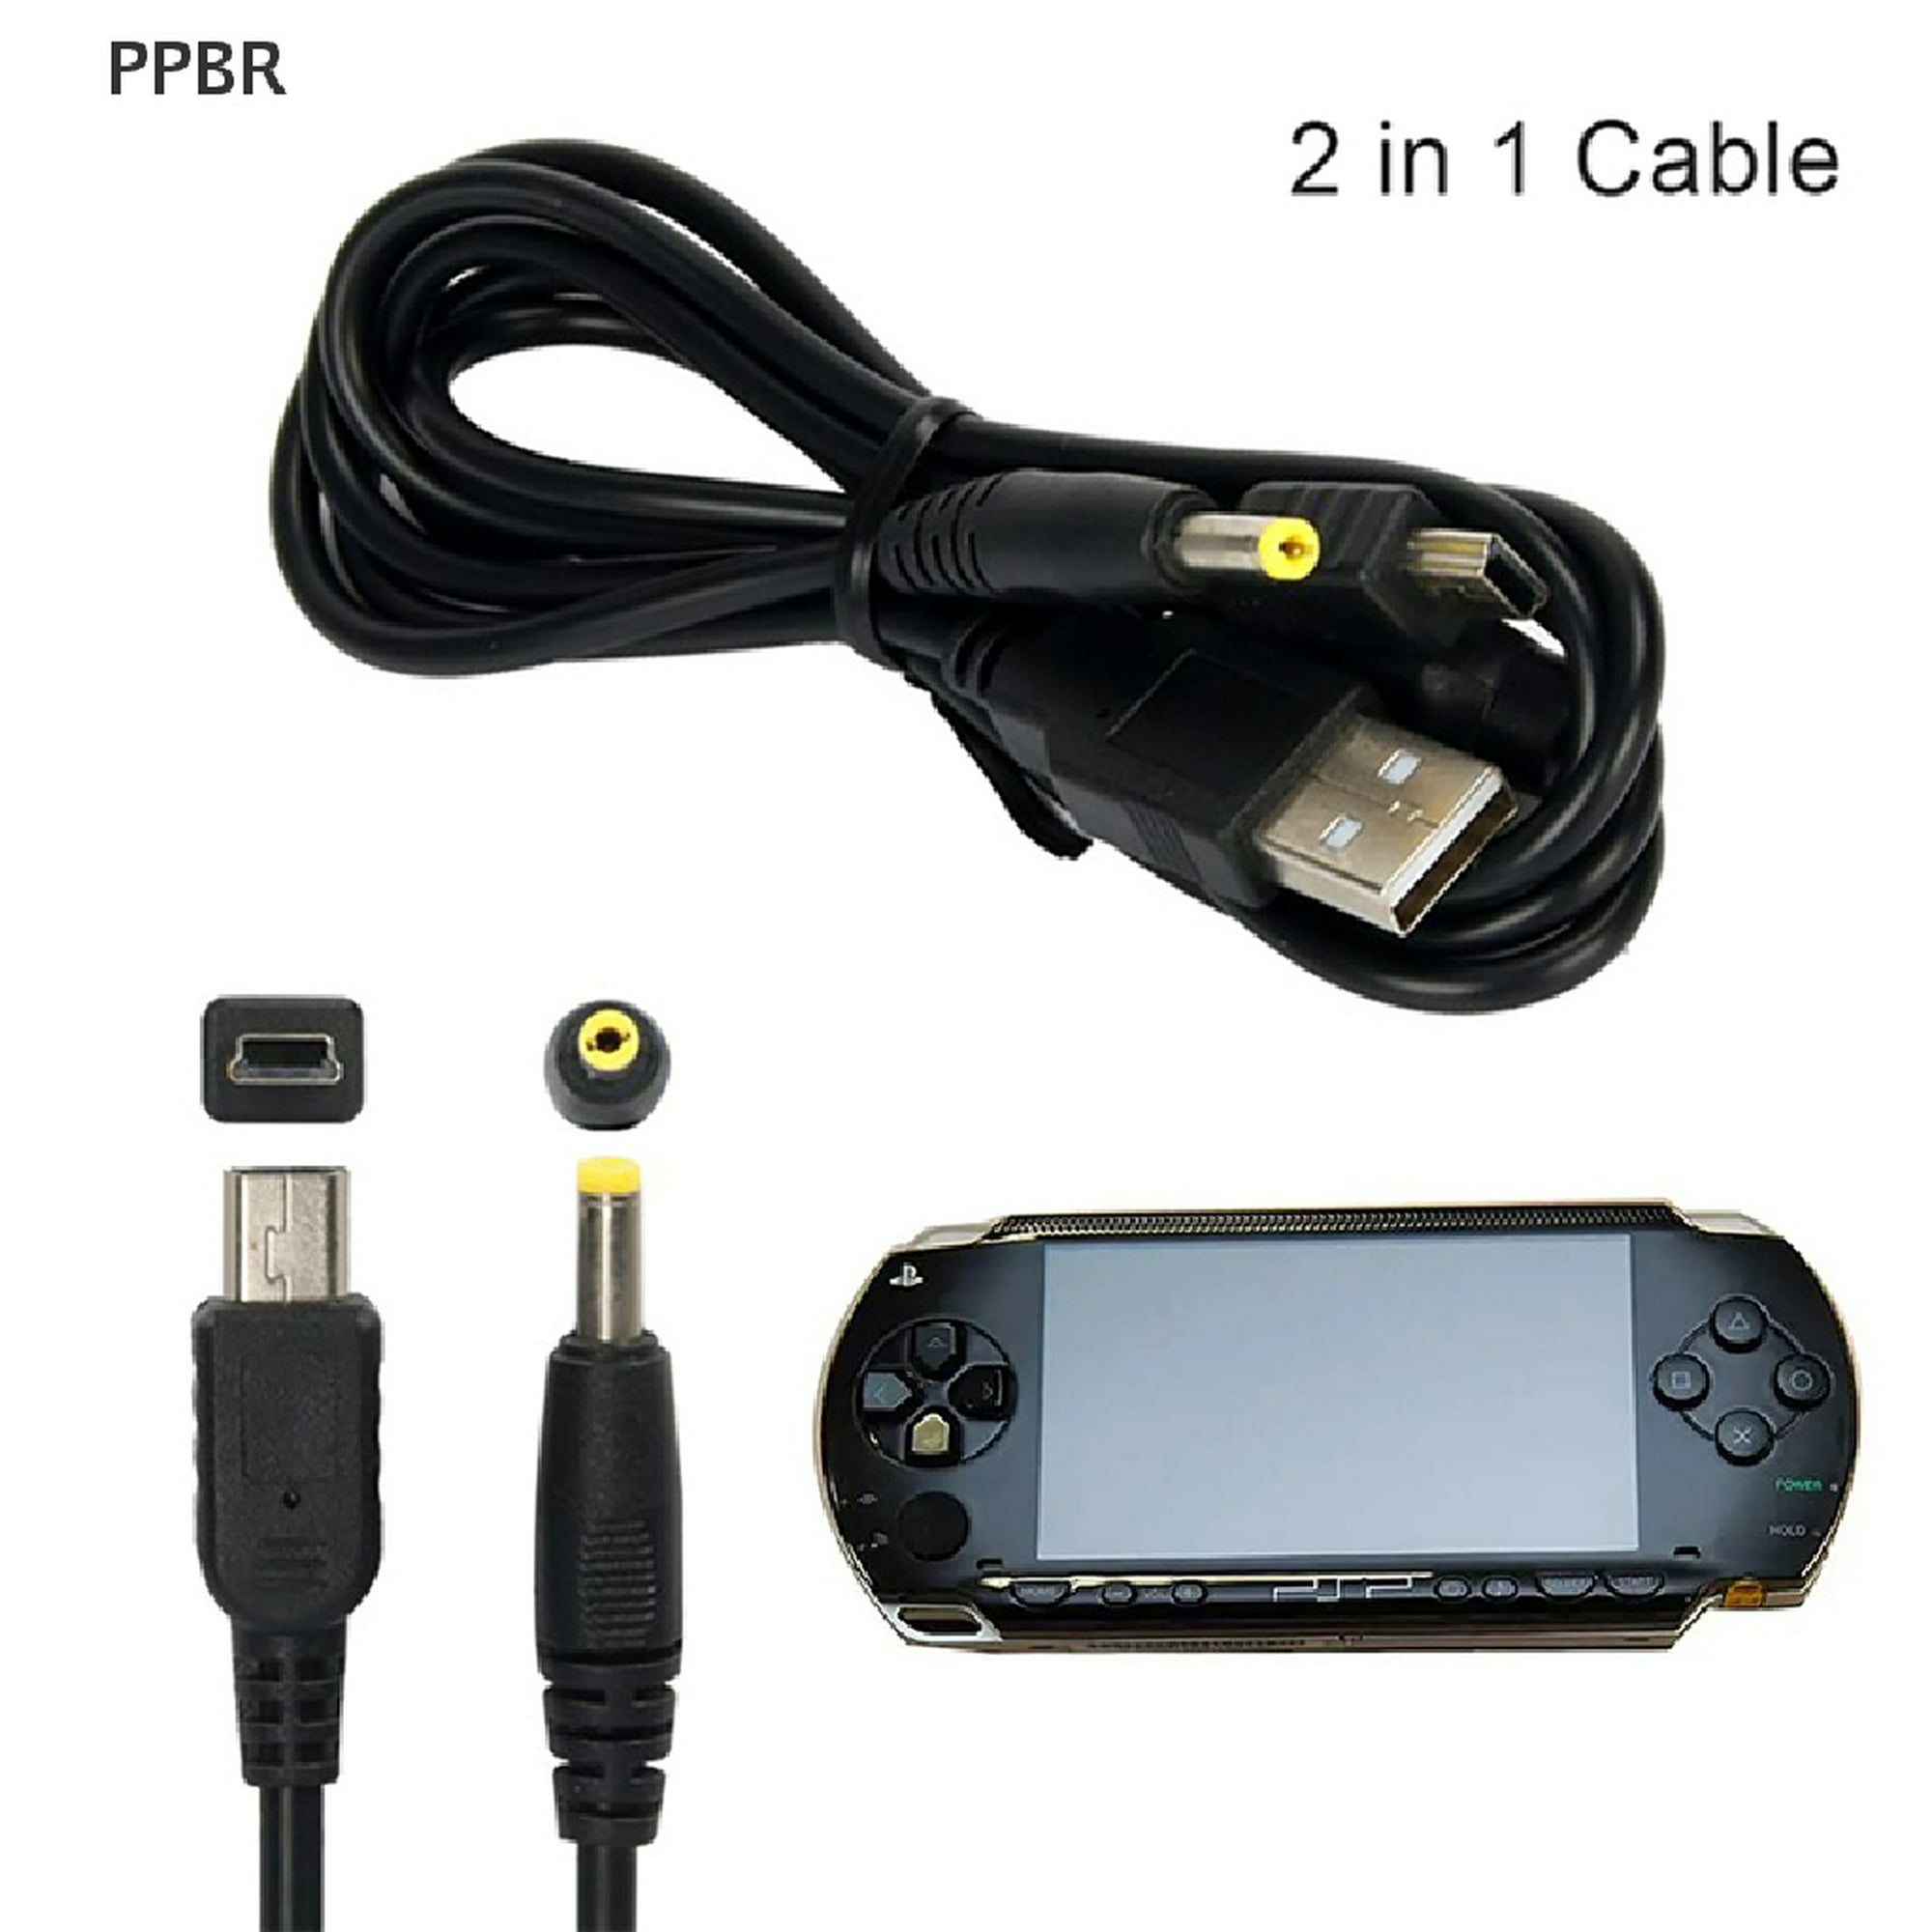 Cable de carga Psp 2000, Cable cargador Psp 2000